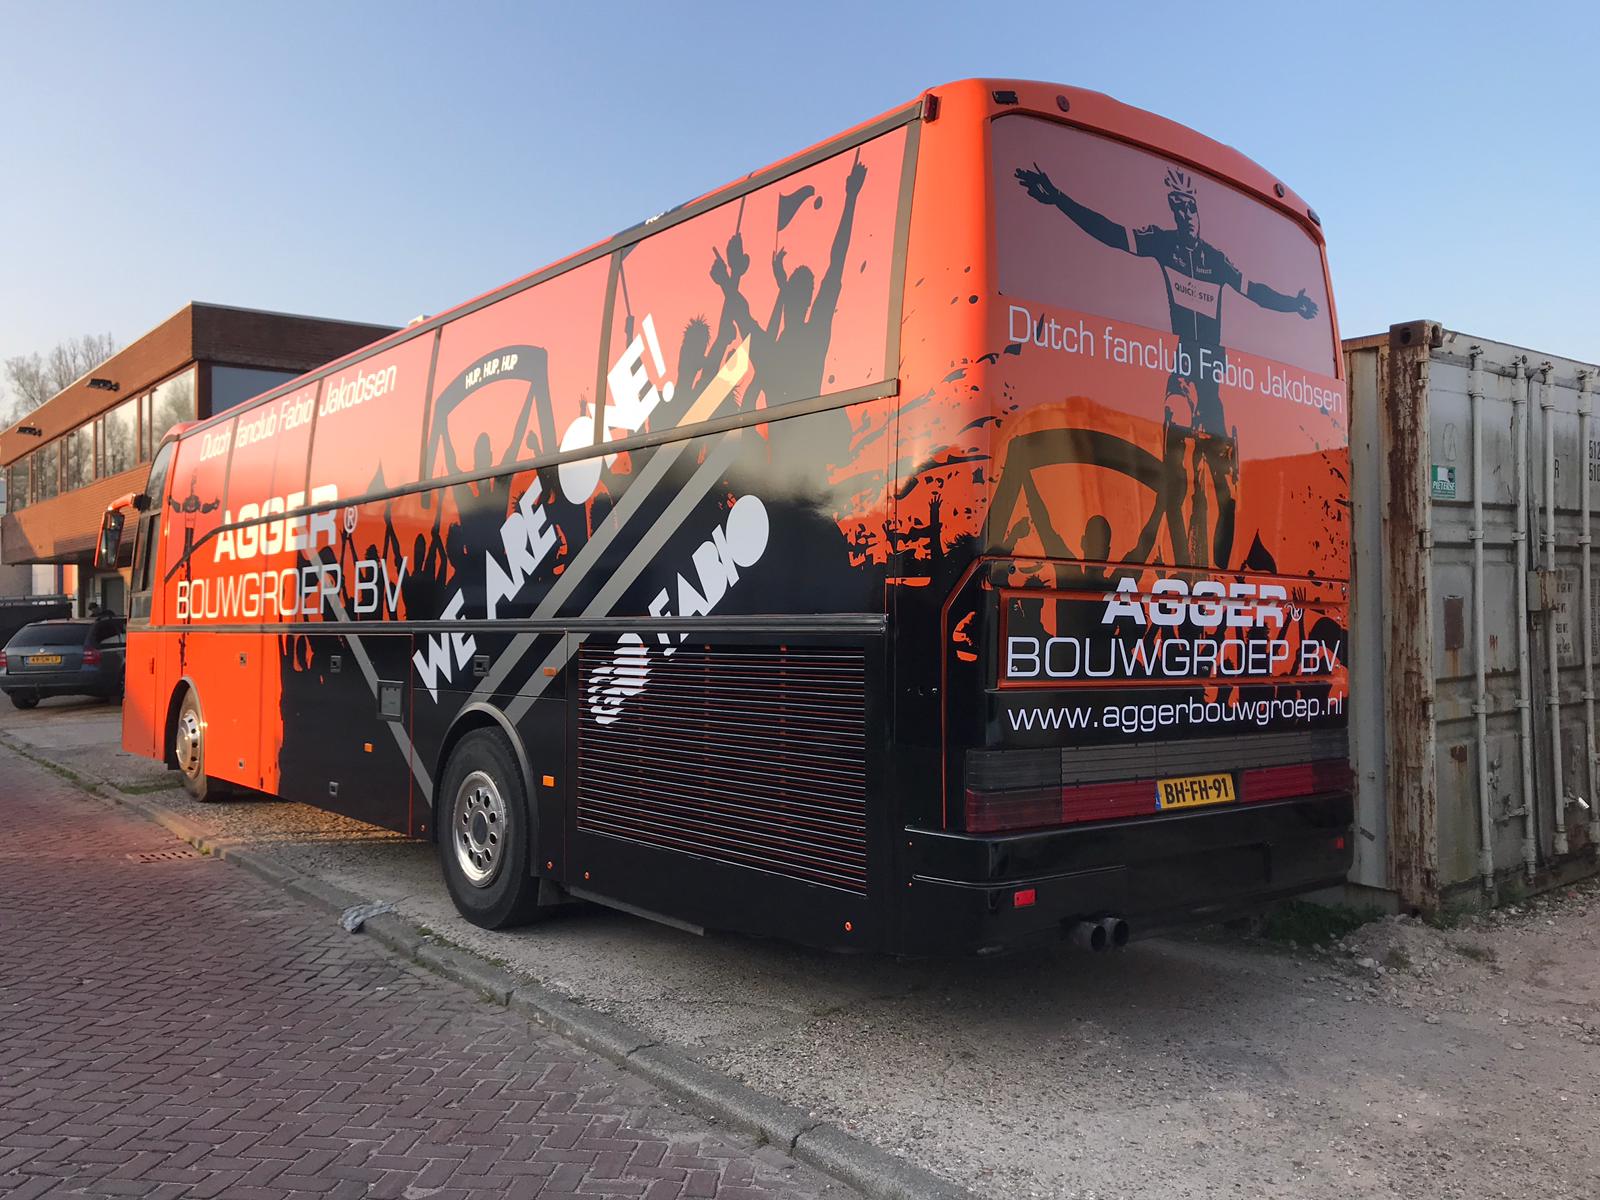 Agger Bouwgroep Bus